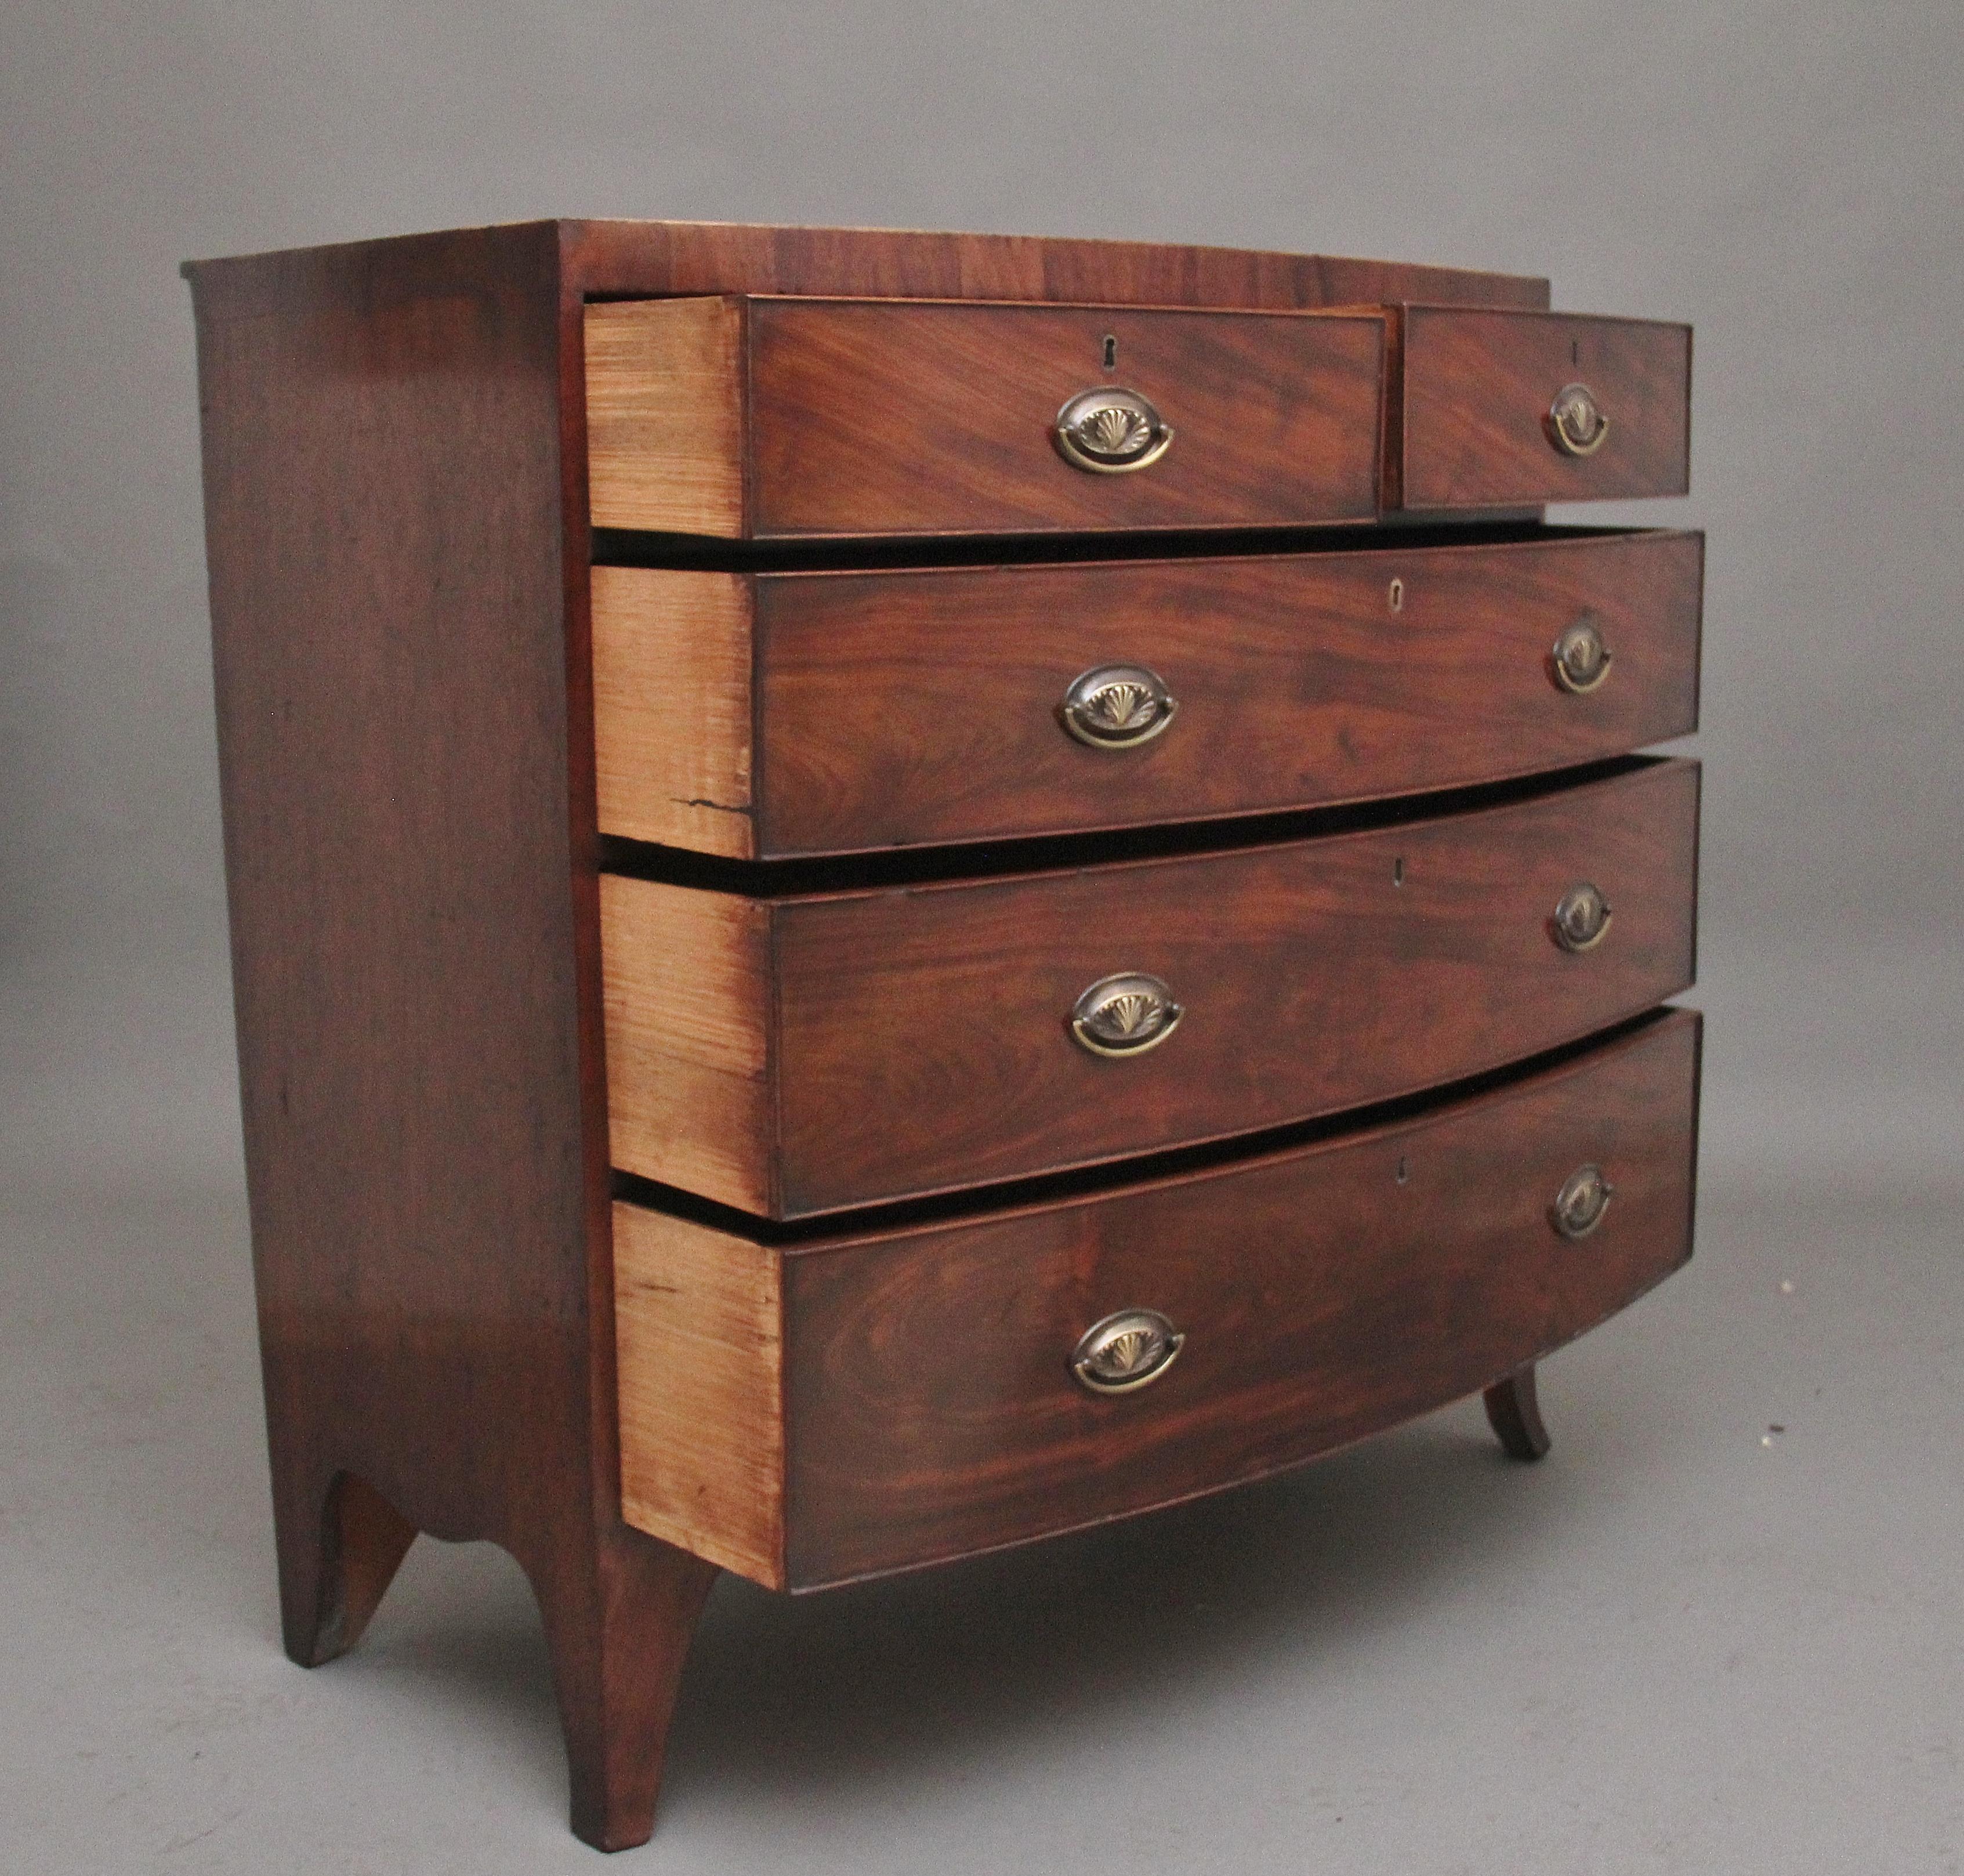 British Early 19th Century mahogany bowfront chest